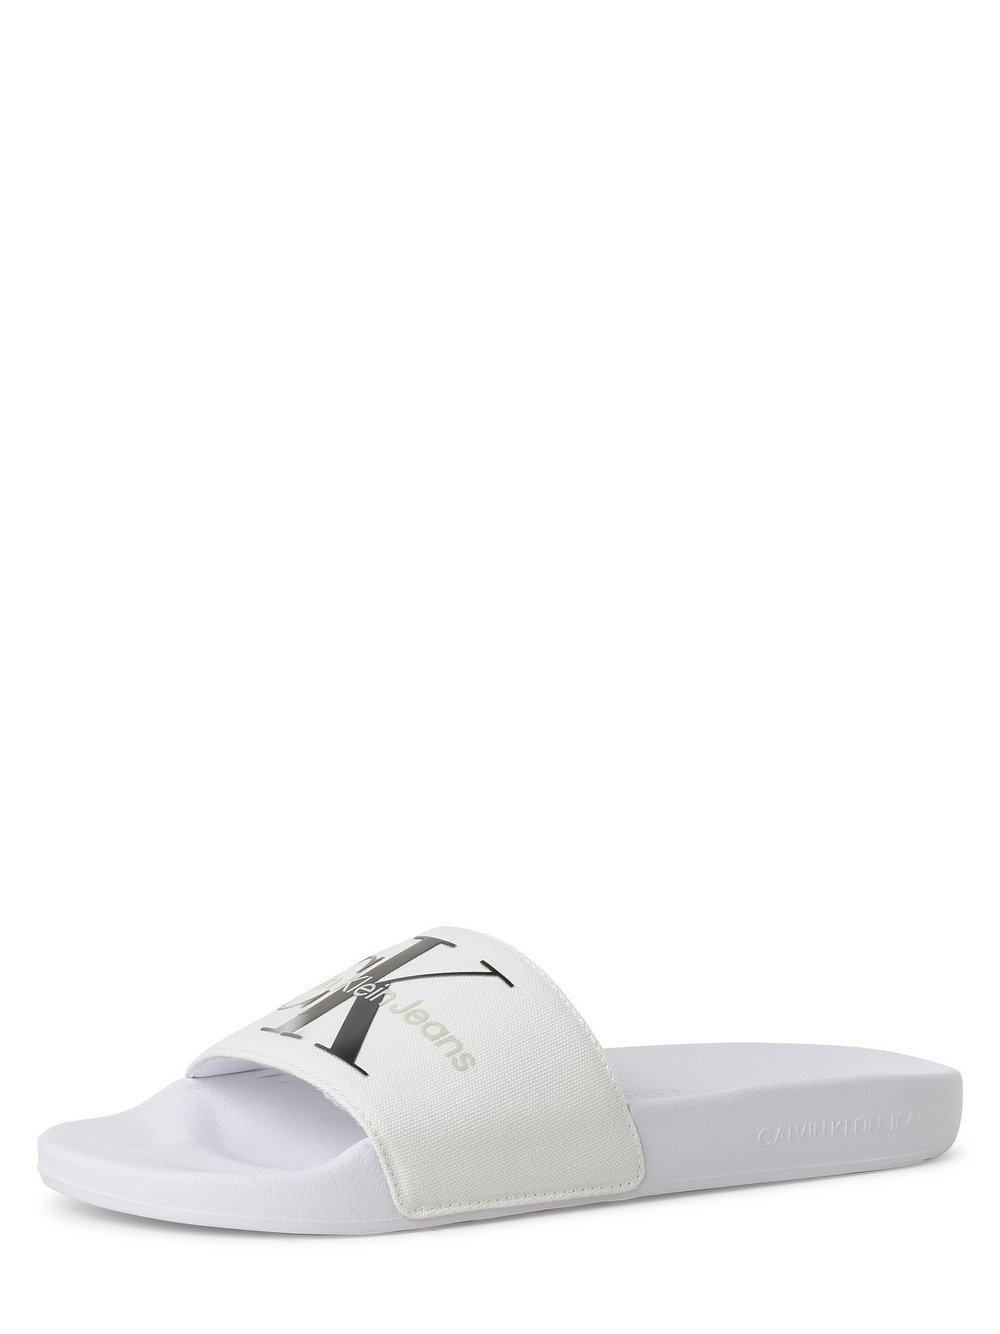 Calvin Klein - Męskie pantofle kąpielowe, biały